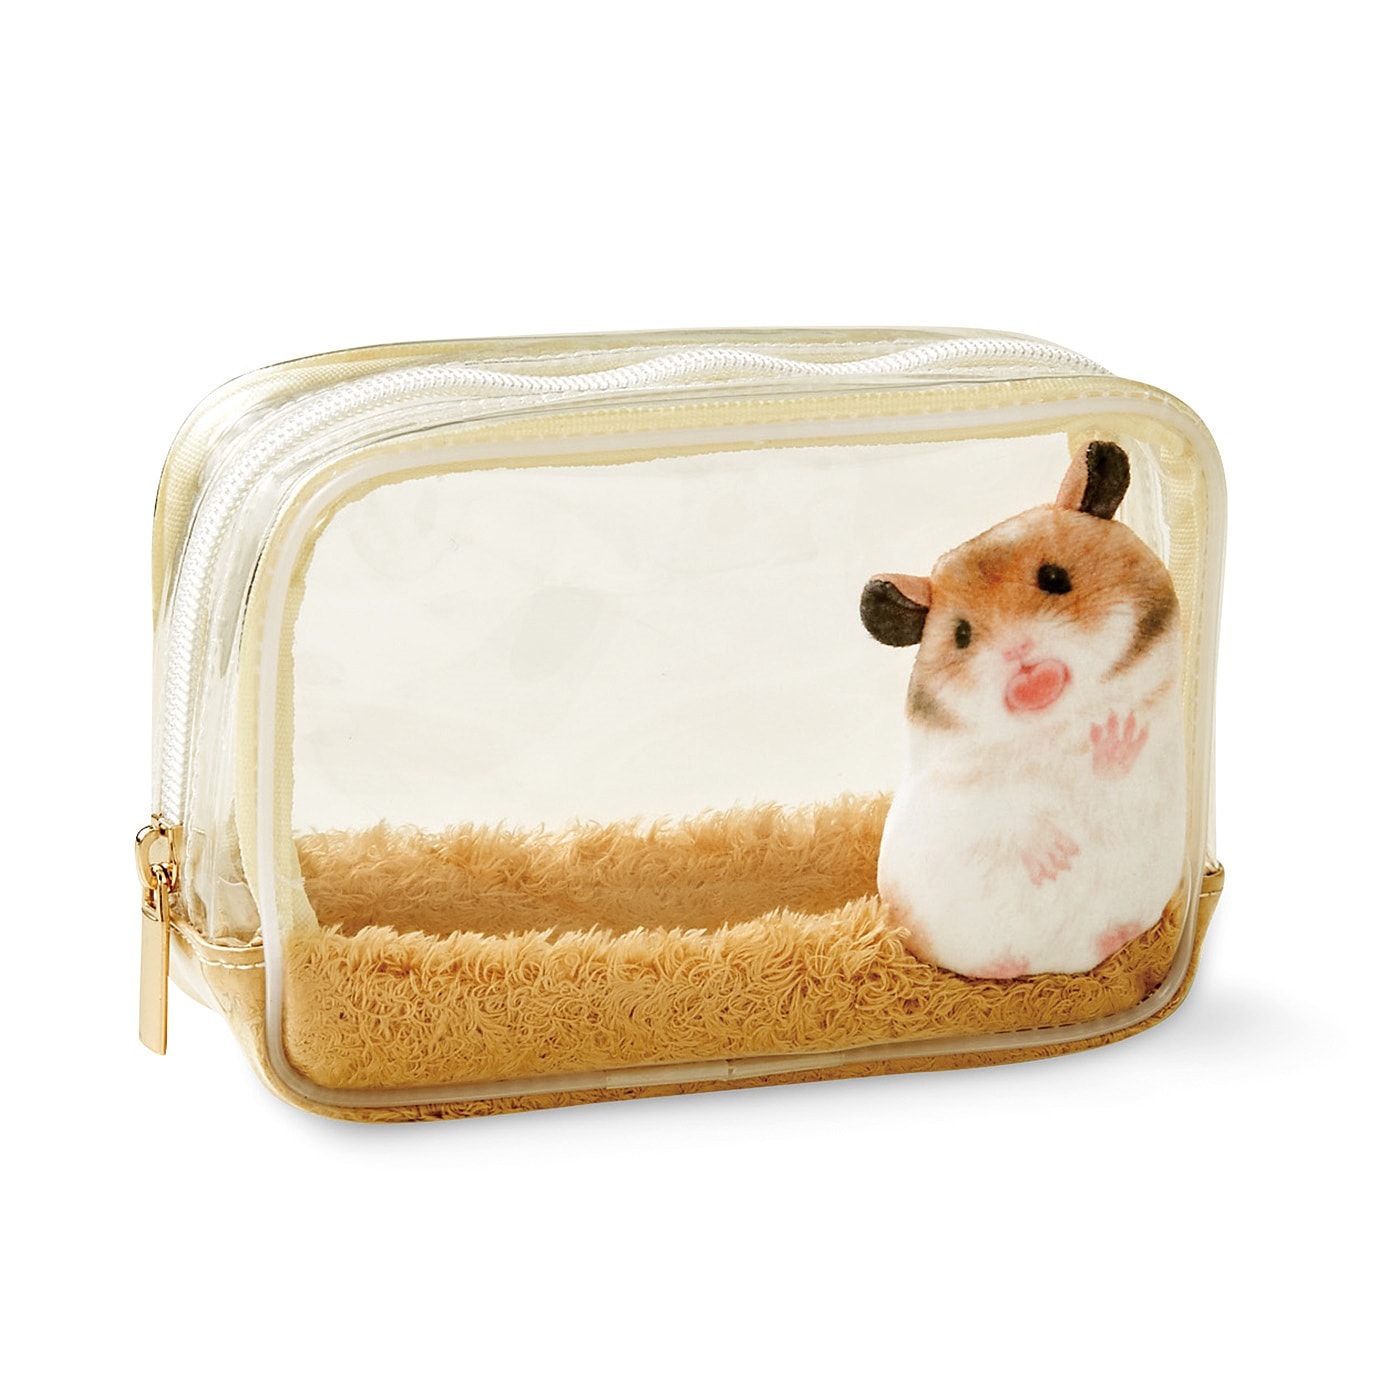 1 hamster design